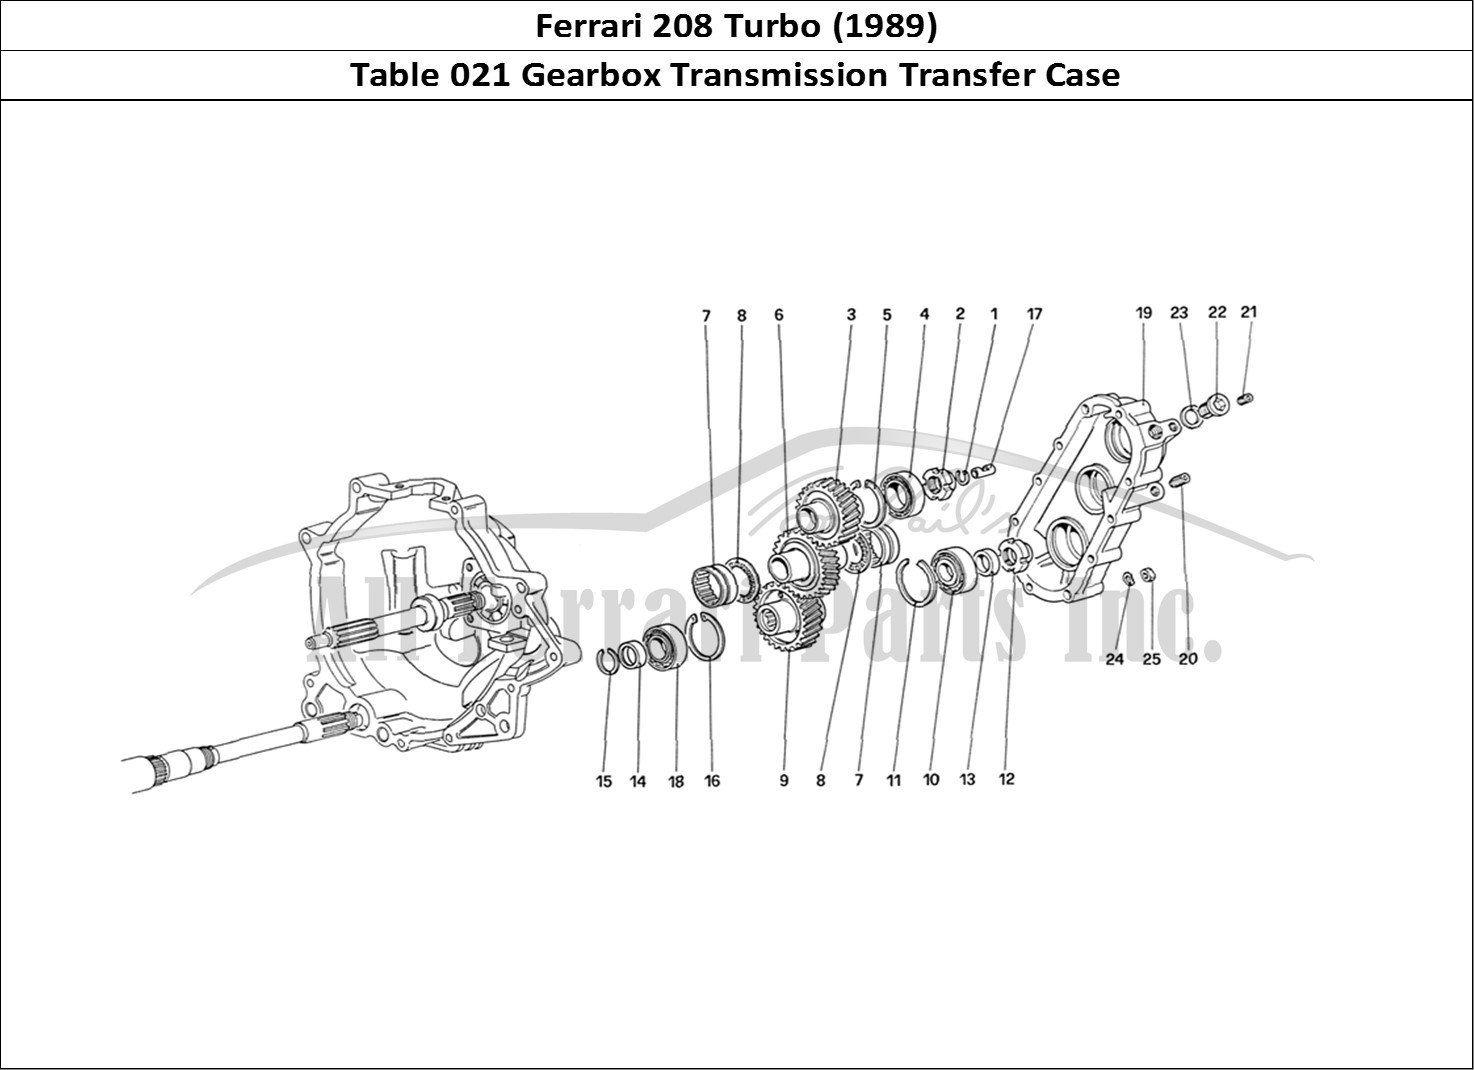 Ferrari Parts Ferrari 208 Turbo (1989) Page 021 Gearbox Transmission